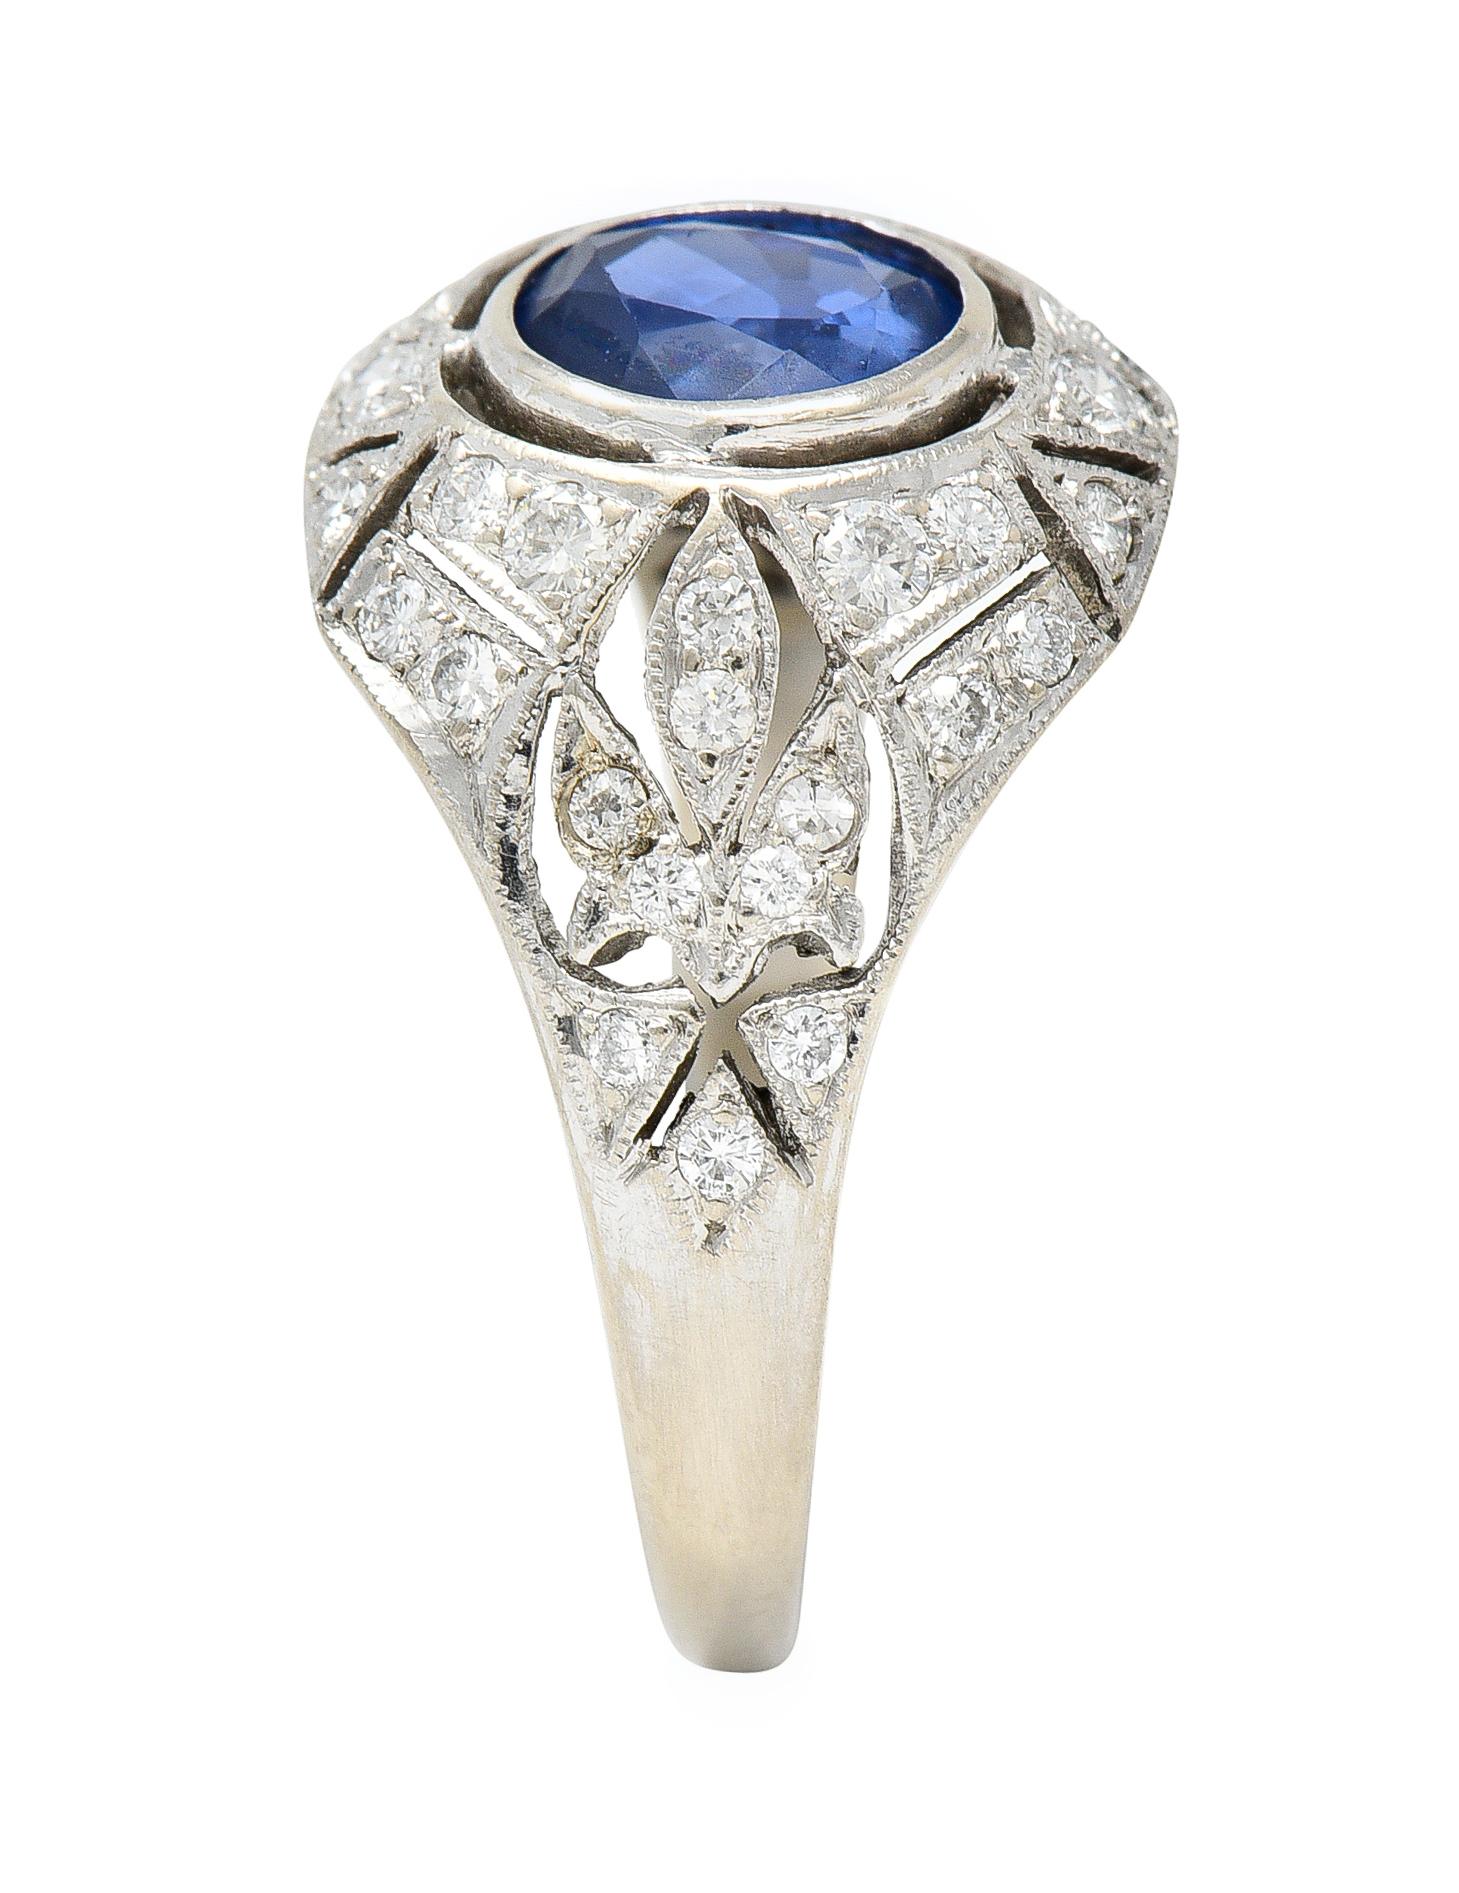 1960s Art Deco Revival 1.72 Carats Sapphire Diamond 14 Karat White Gold Ring 4